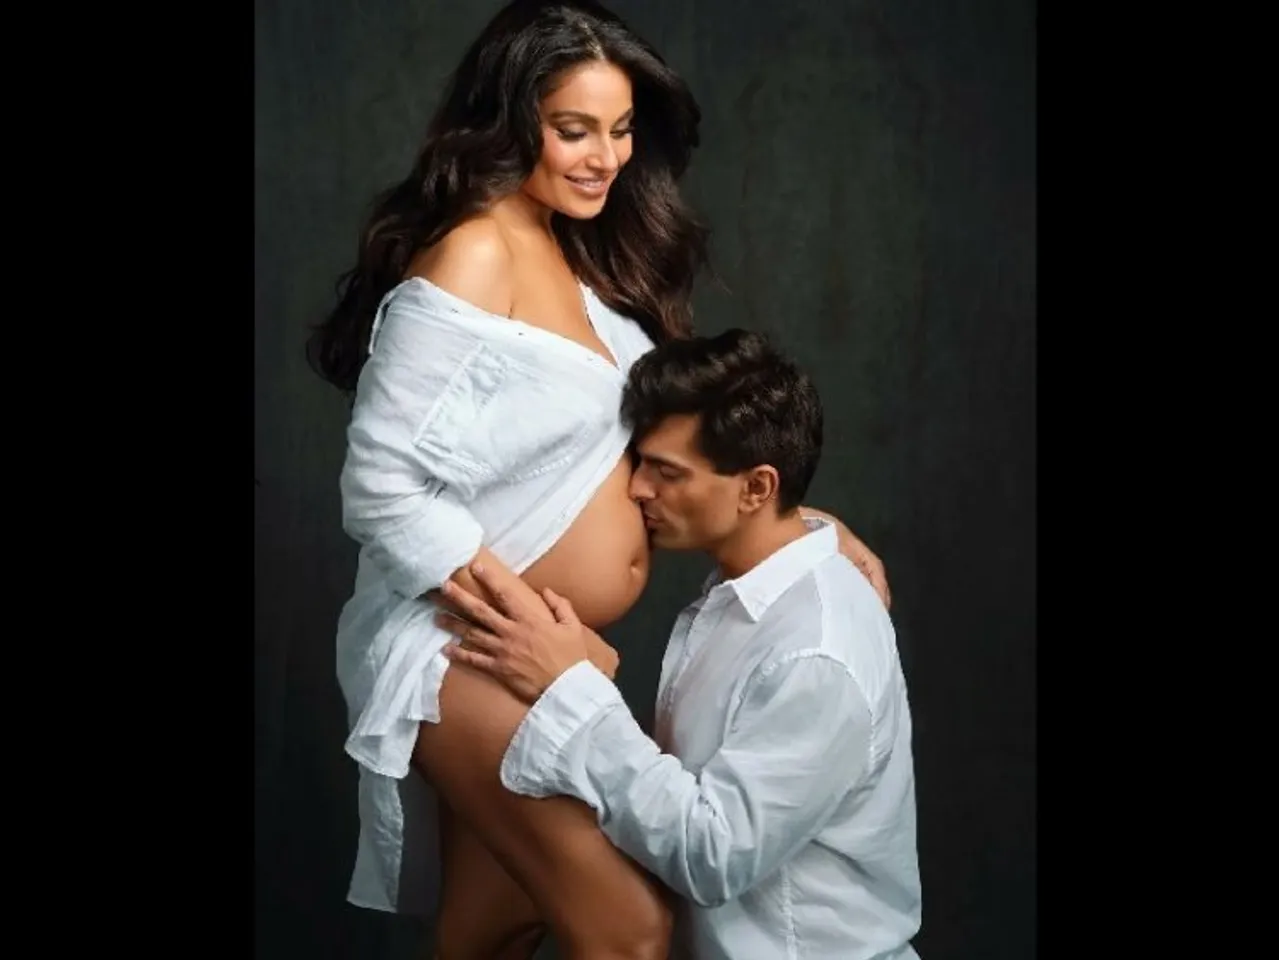 Bipasha Basu and Karan Singh Grover made the pregnancy announcement on their social media